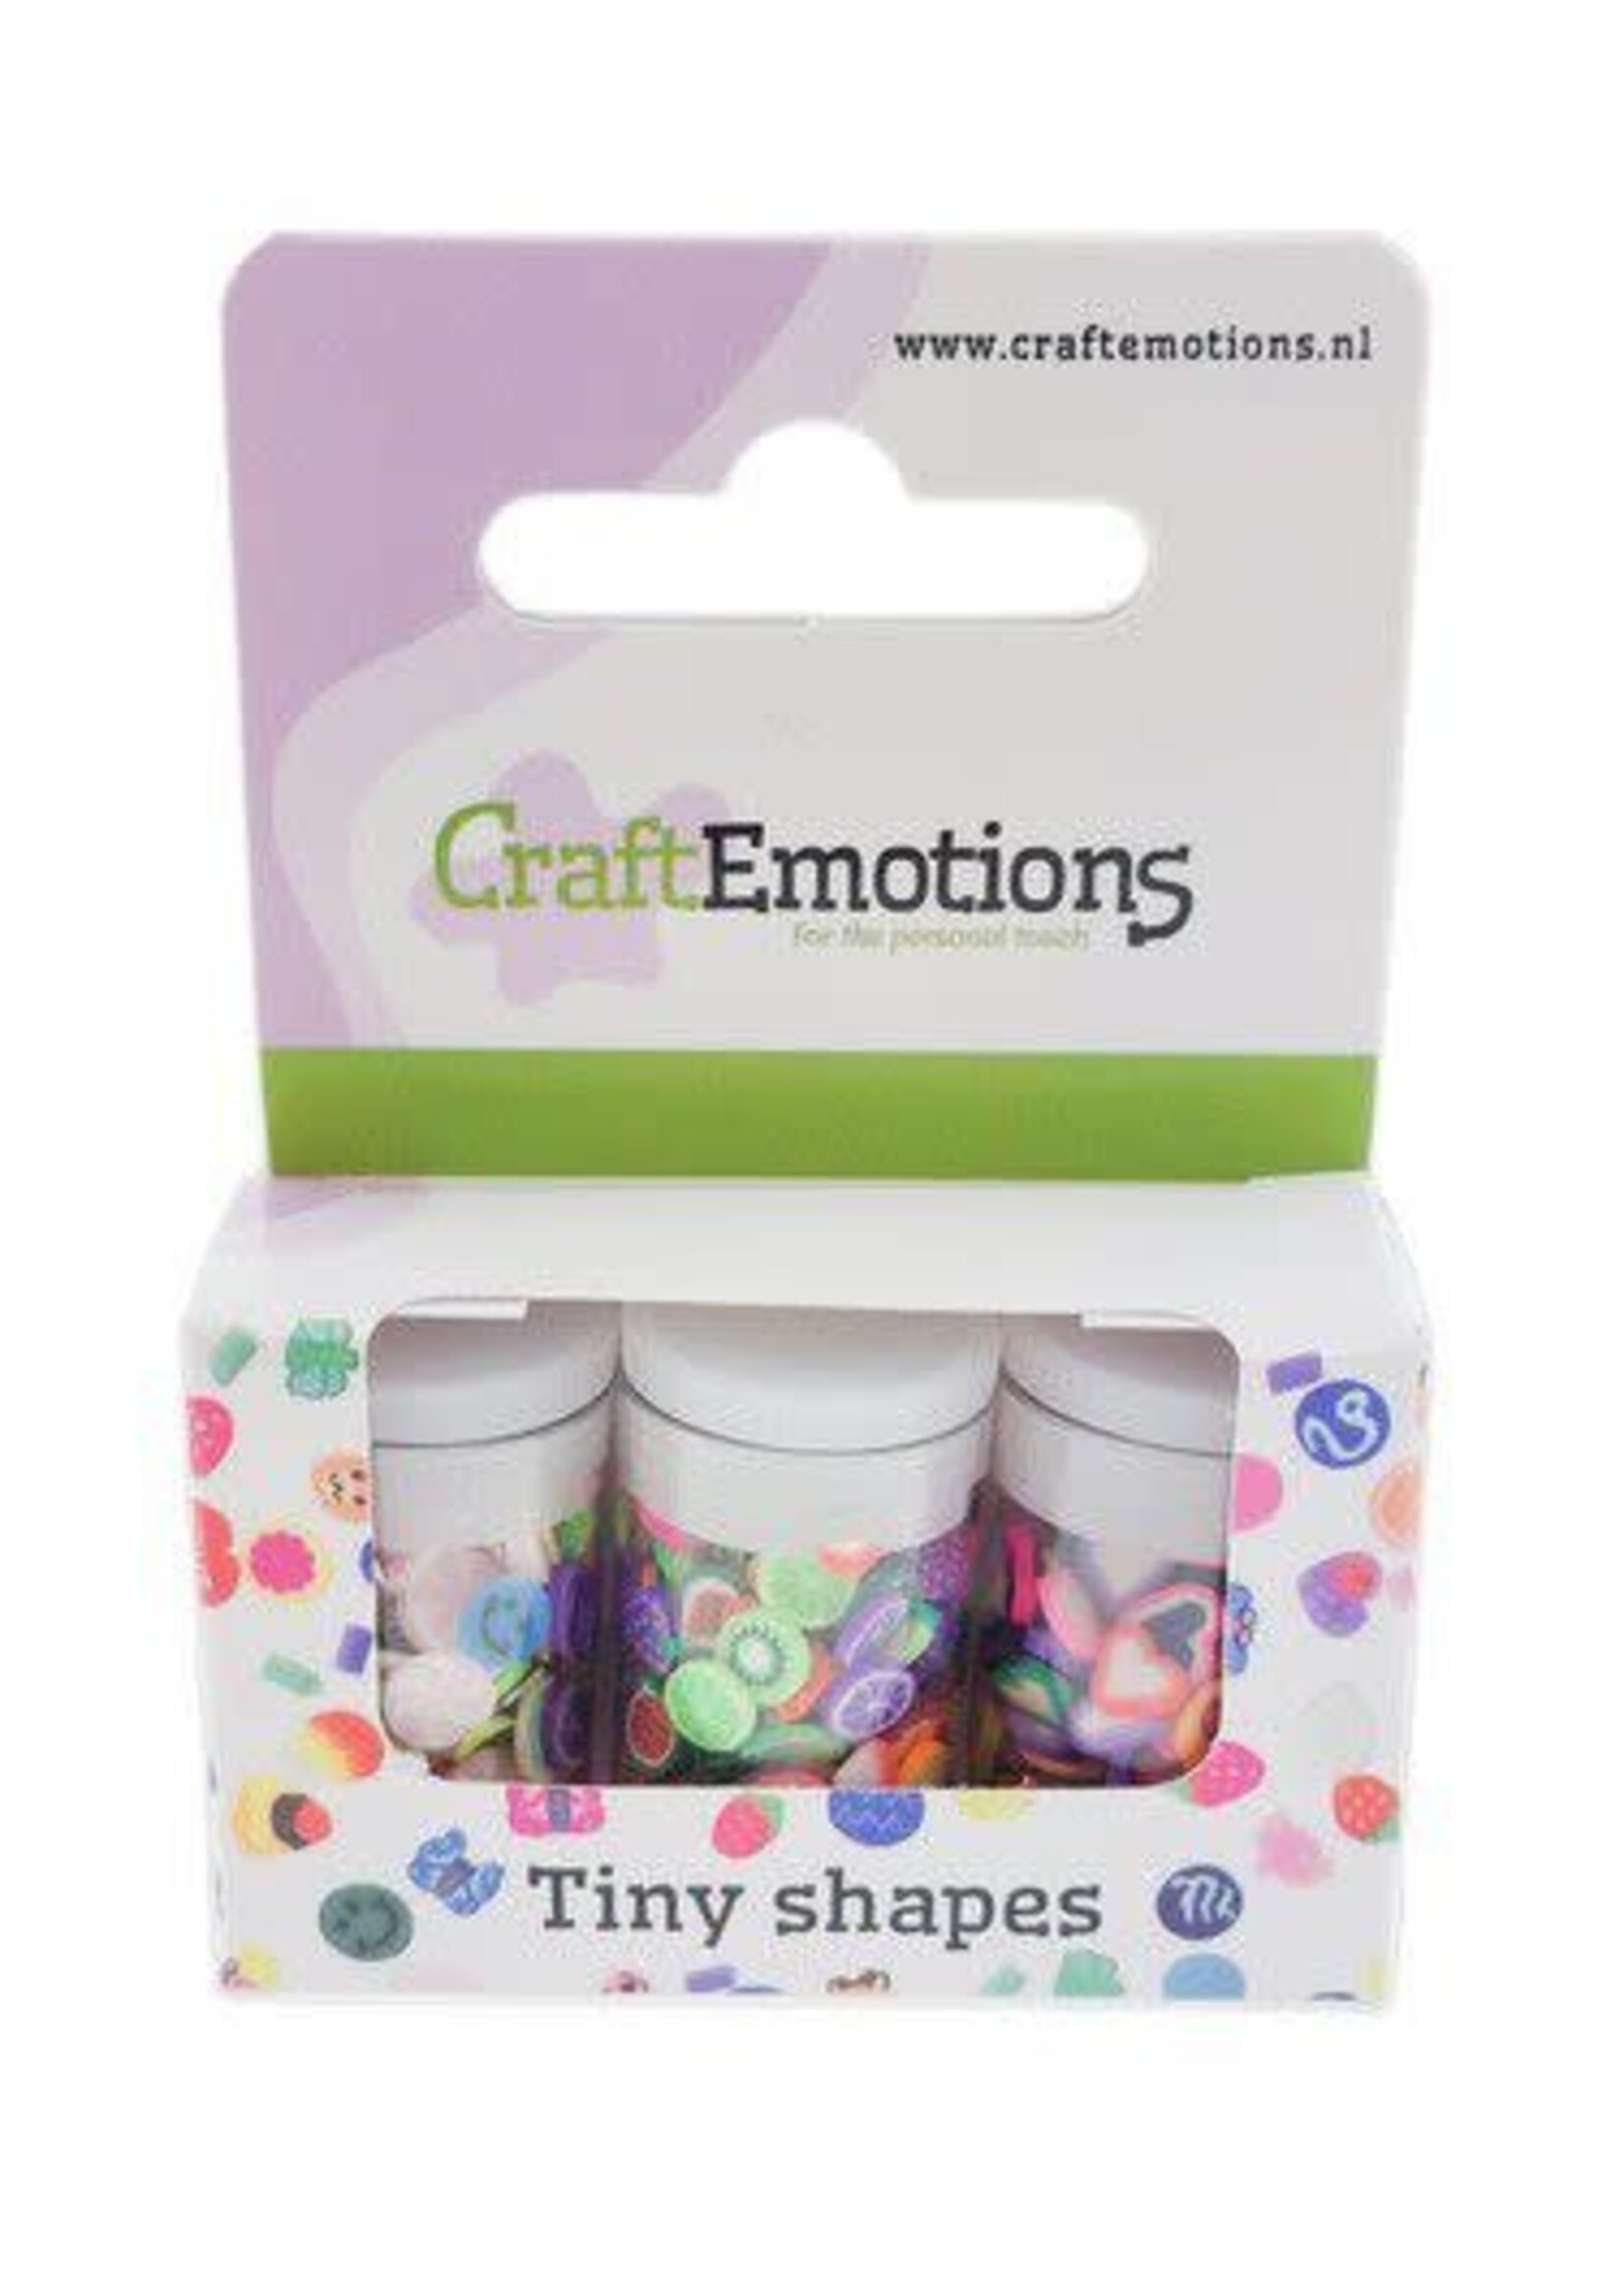 Craft Emotions CraftEmotions Tiny Shapes - 3 tubes - various shapes 1 (04-23) Artikelnummer 470003/0011